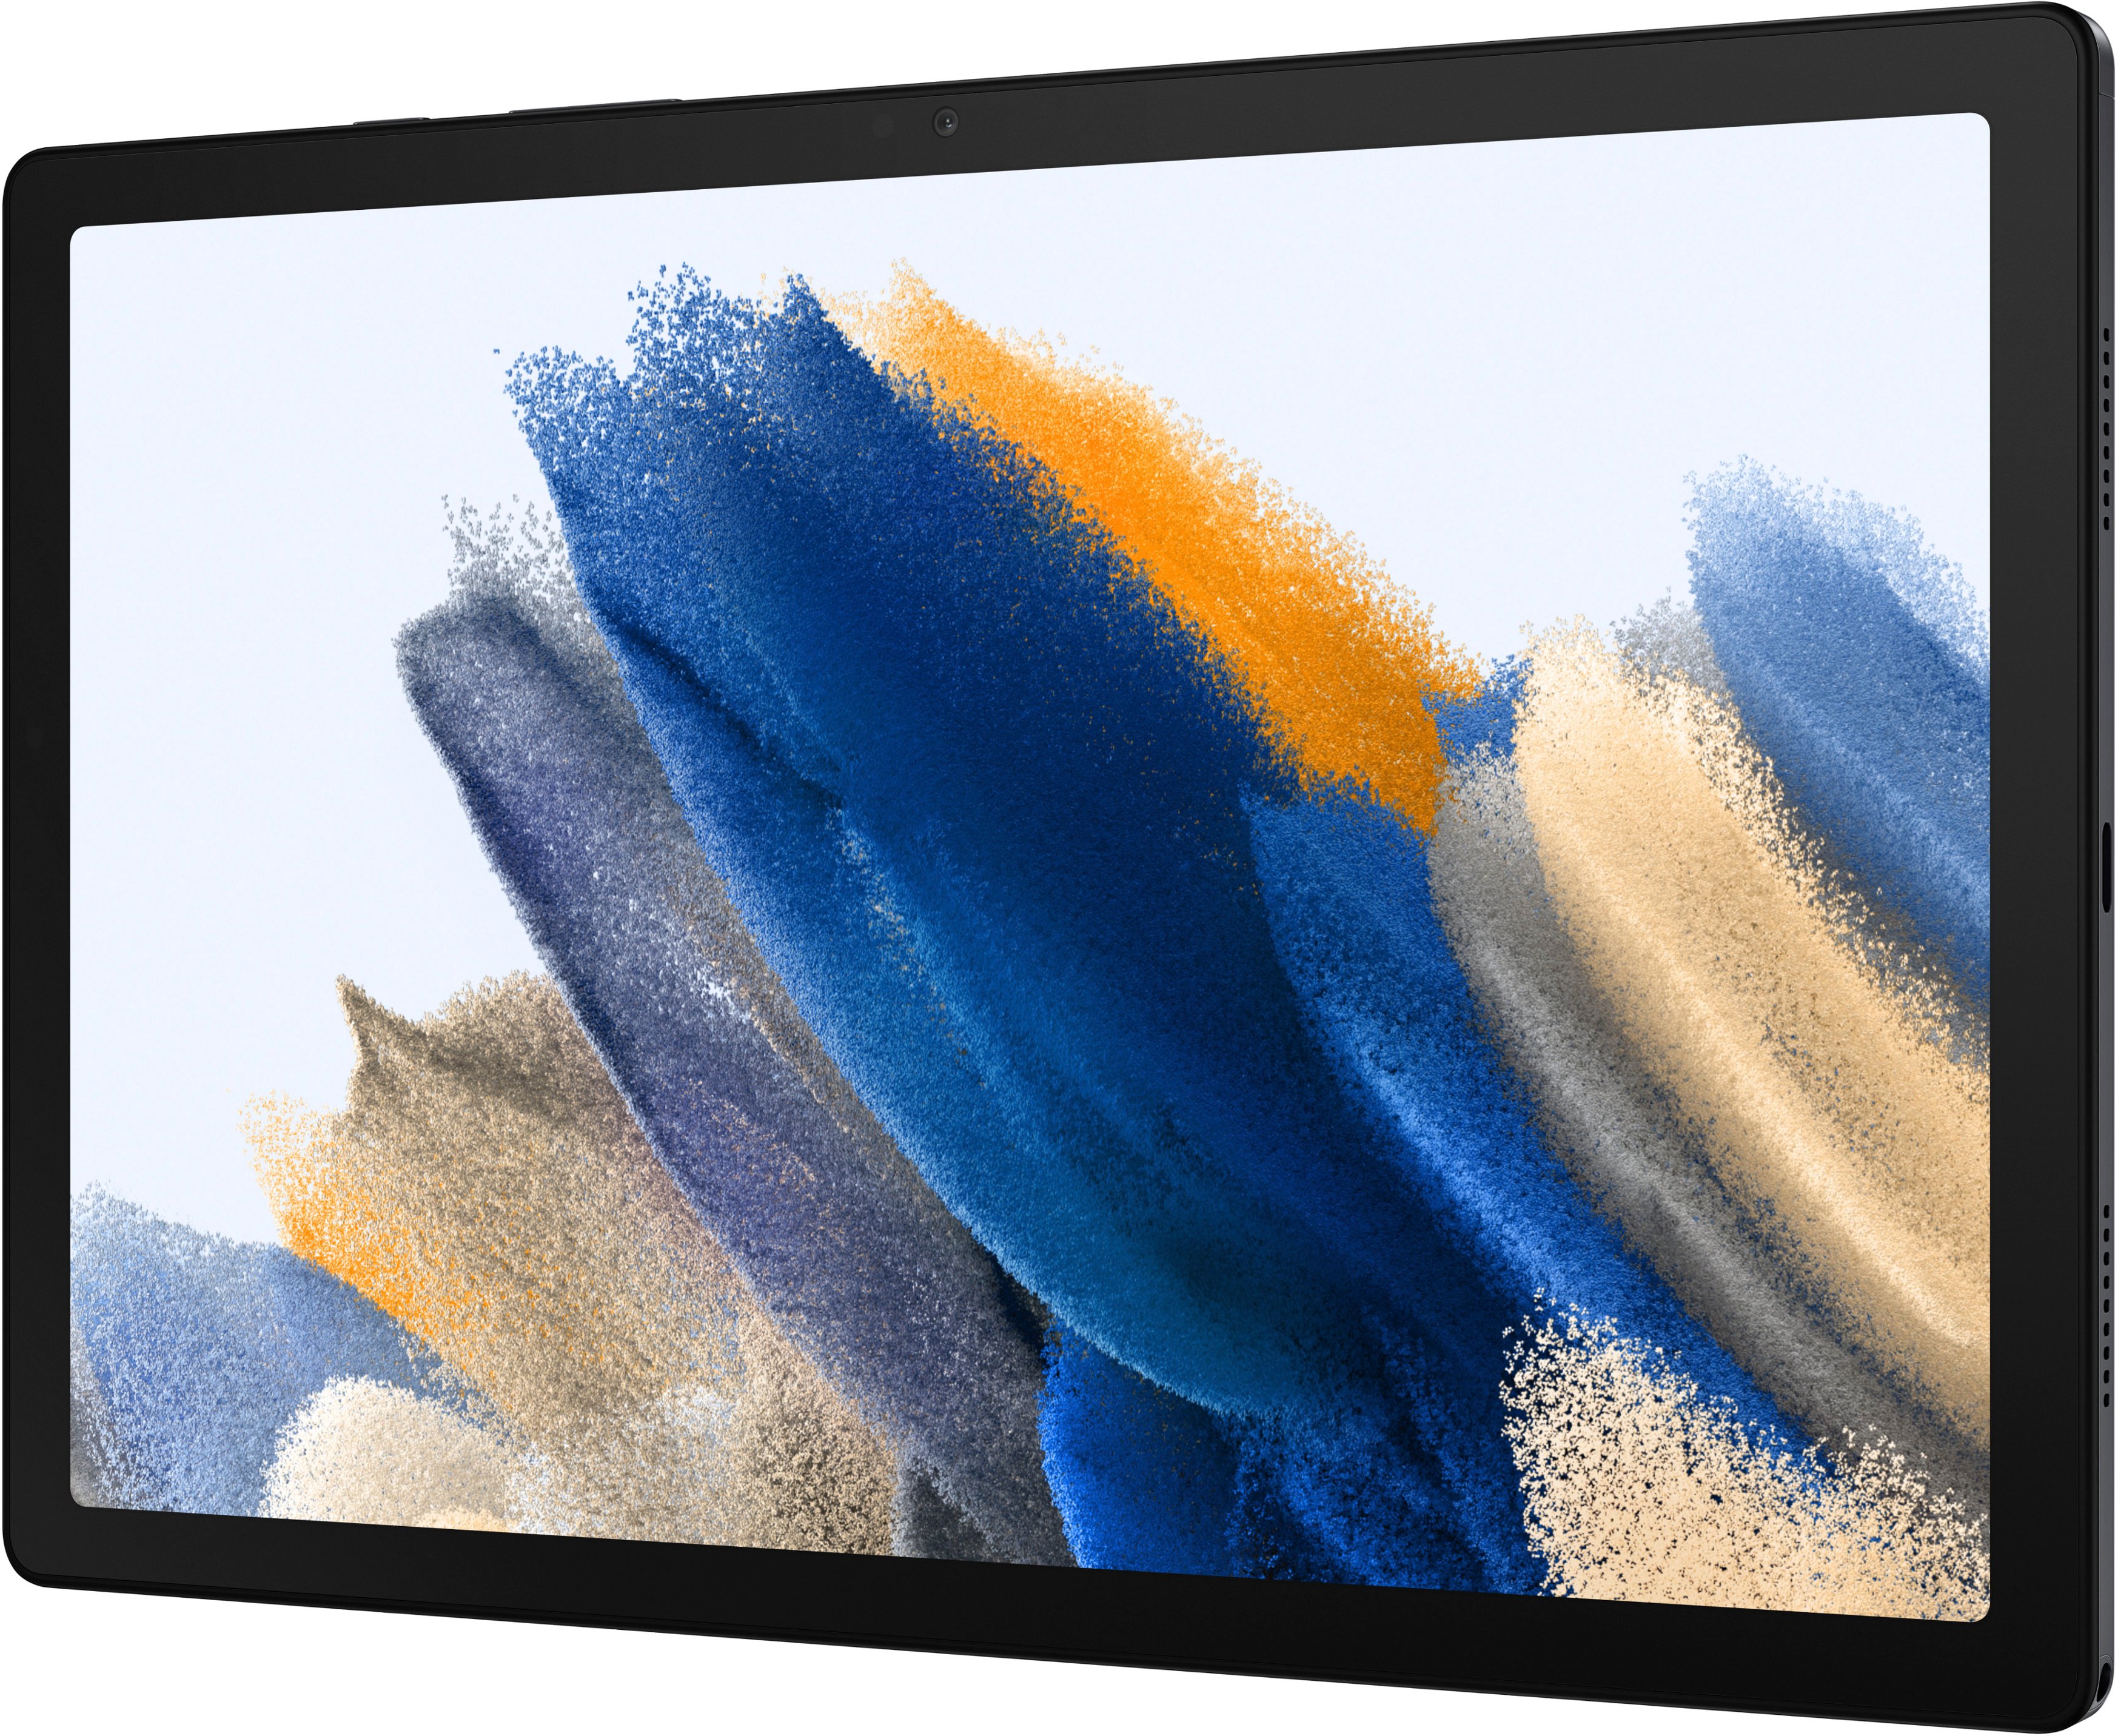 Angle View: Samsung - Galaxy Tab S7 Plus - 12.4” - 256GB - With S Pen - Wi-Fi - Mystic Black